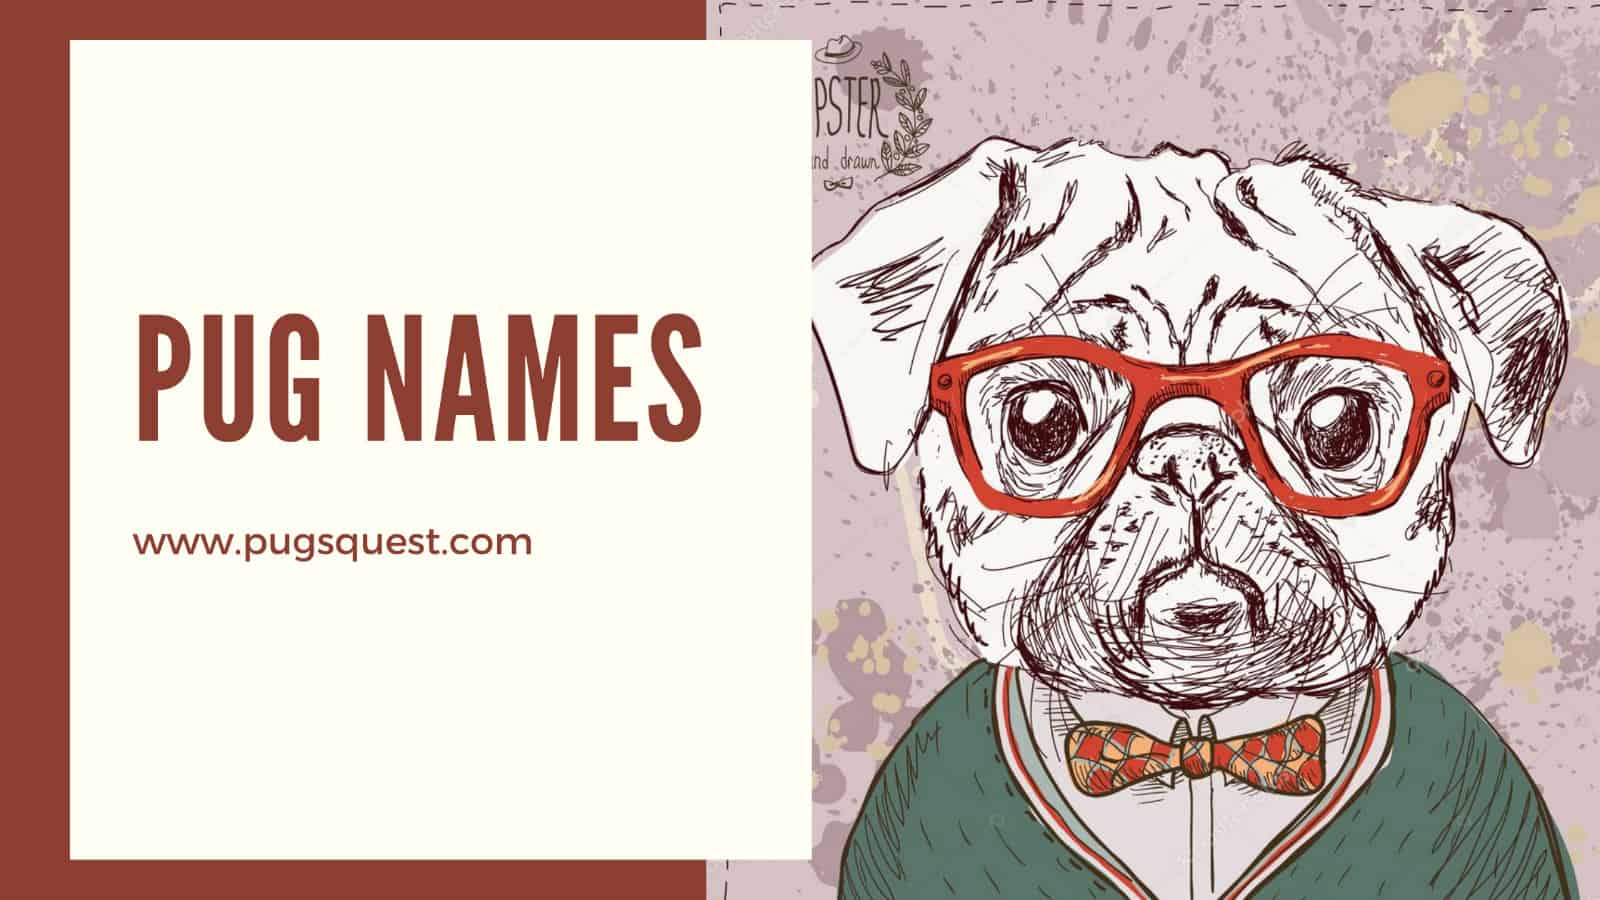 Pug names